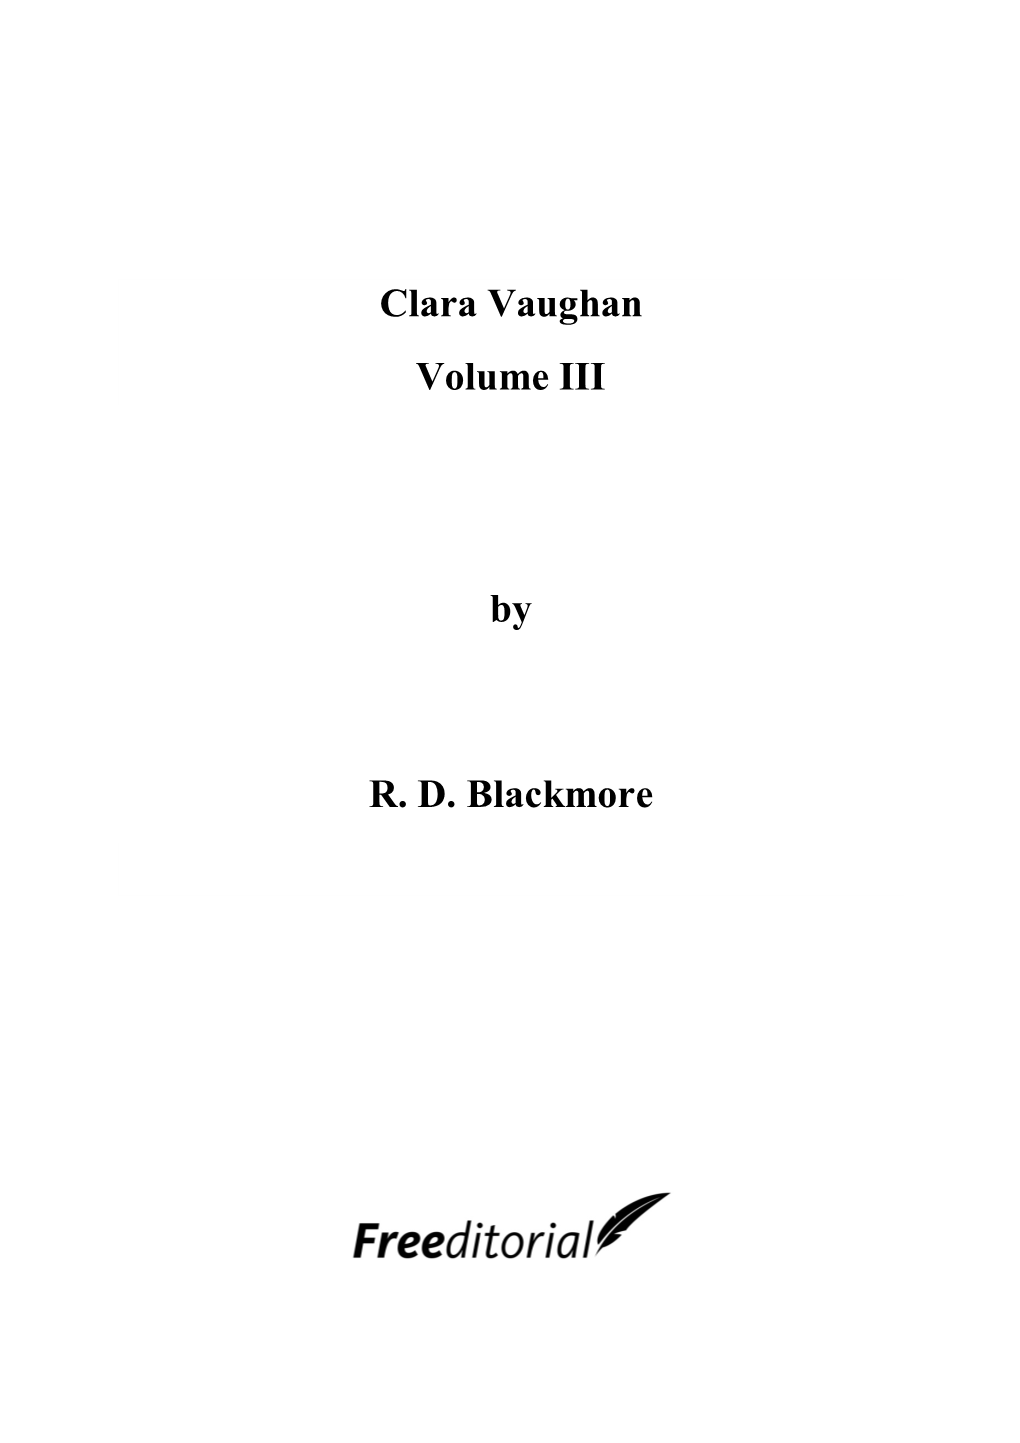 Clara Vaughan Volume III by R. D. Blackmore